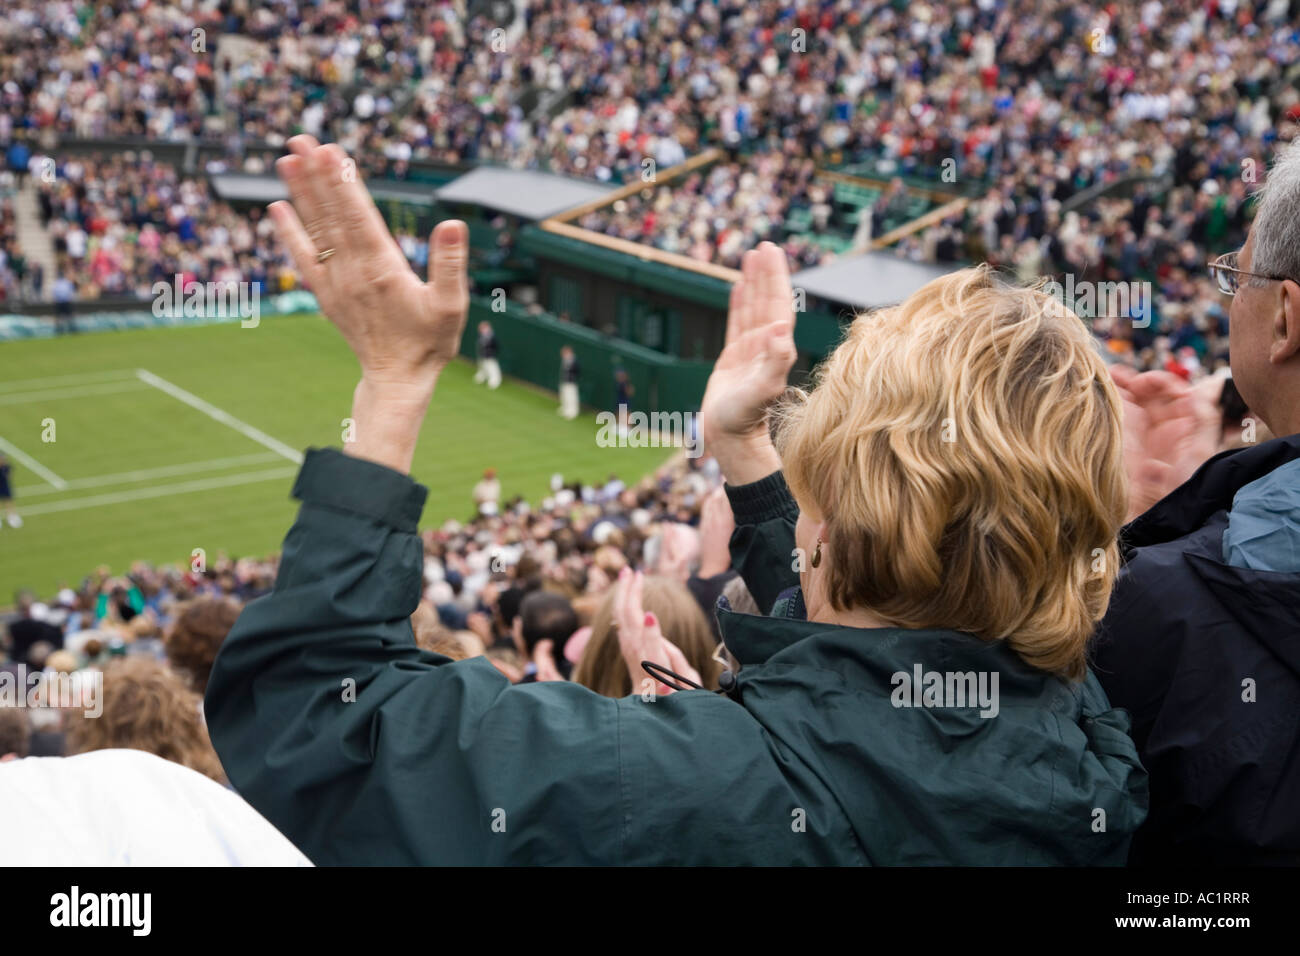 Los espectadores palmas juego de apertura (Federer Gabashvili) en el centro de la Cancha de tenis de Wimbledon Campeonato UK Foto de stock